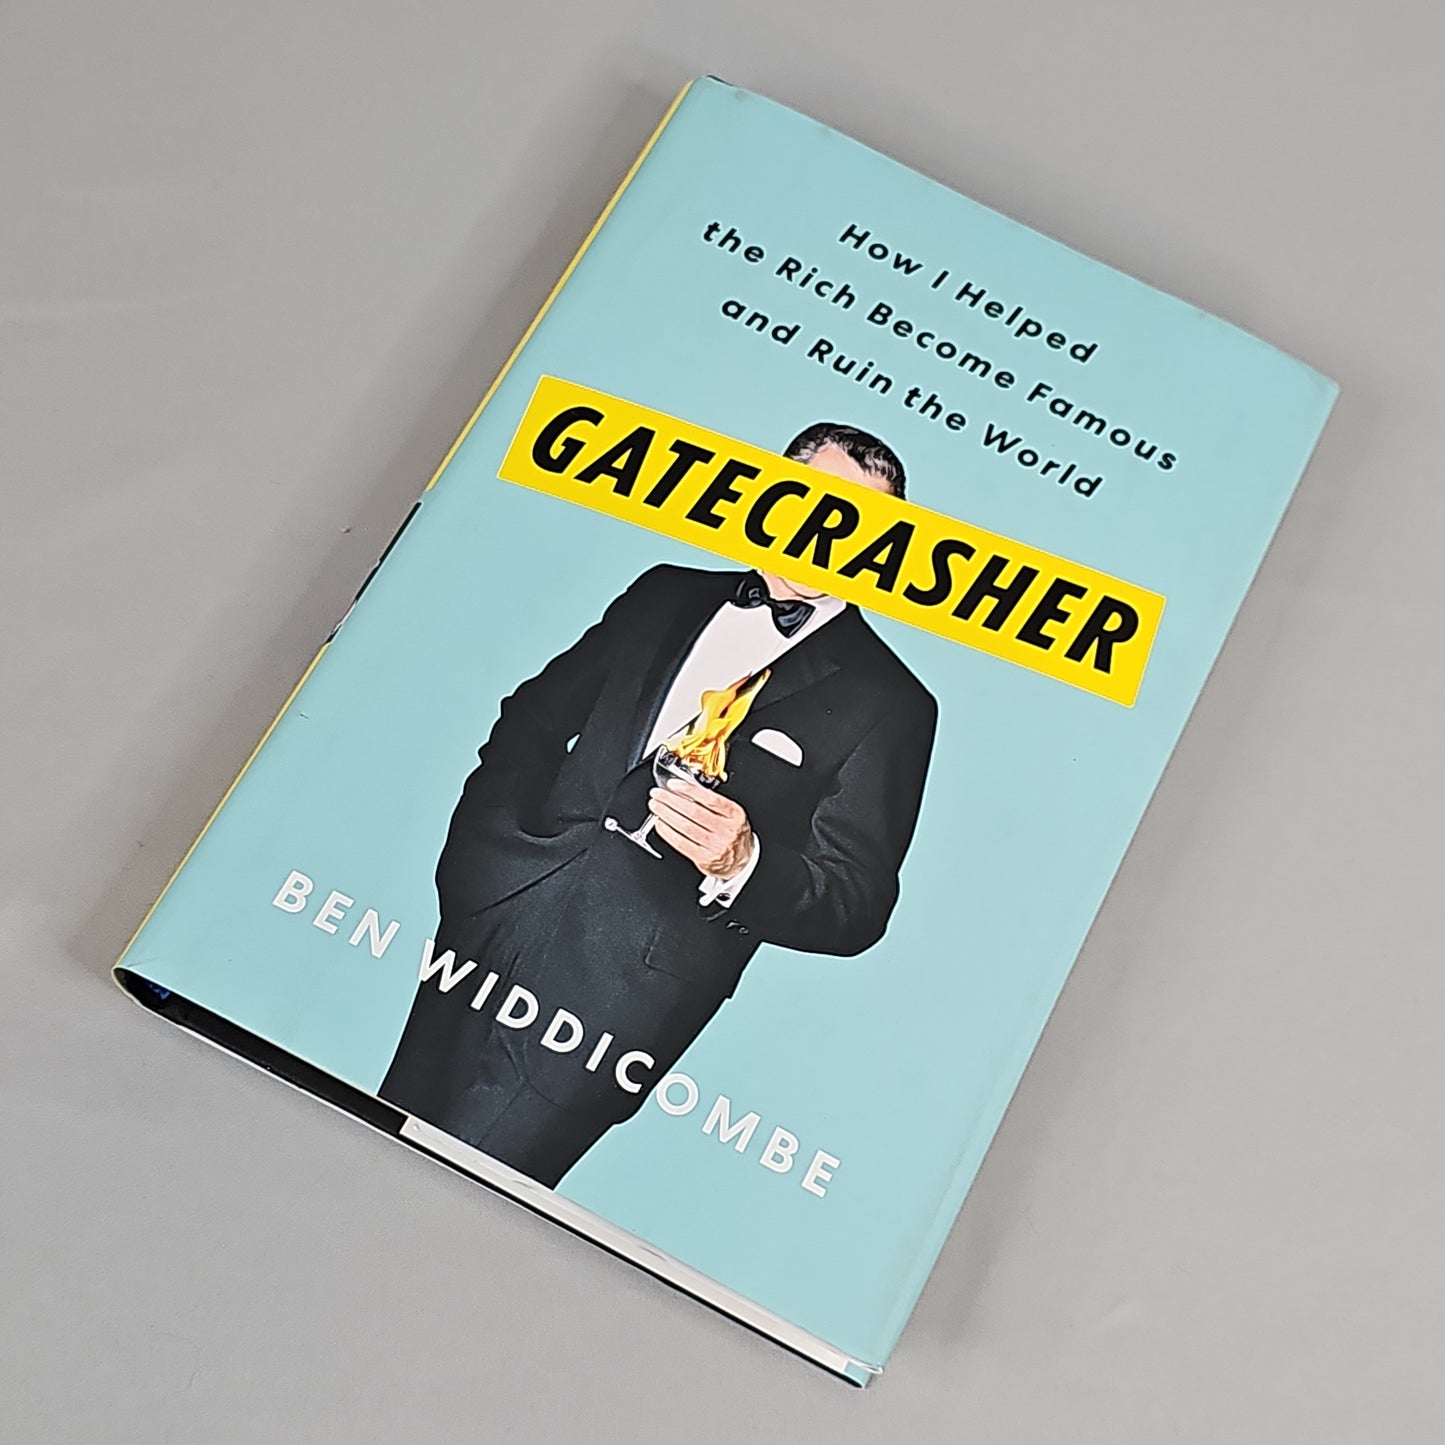 GATECRASHER by Ben Widdicombe Book Hardback (New)